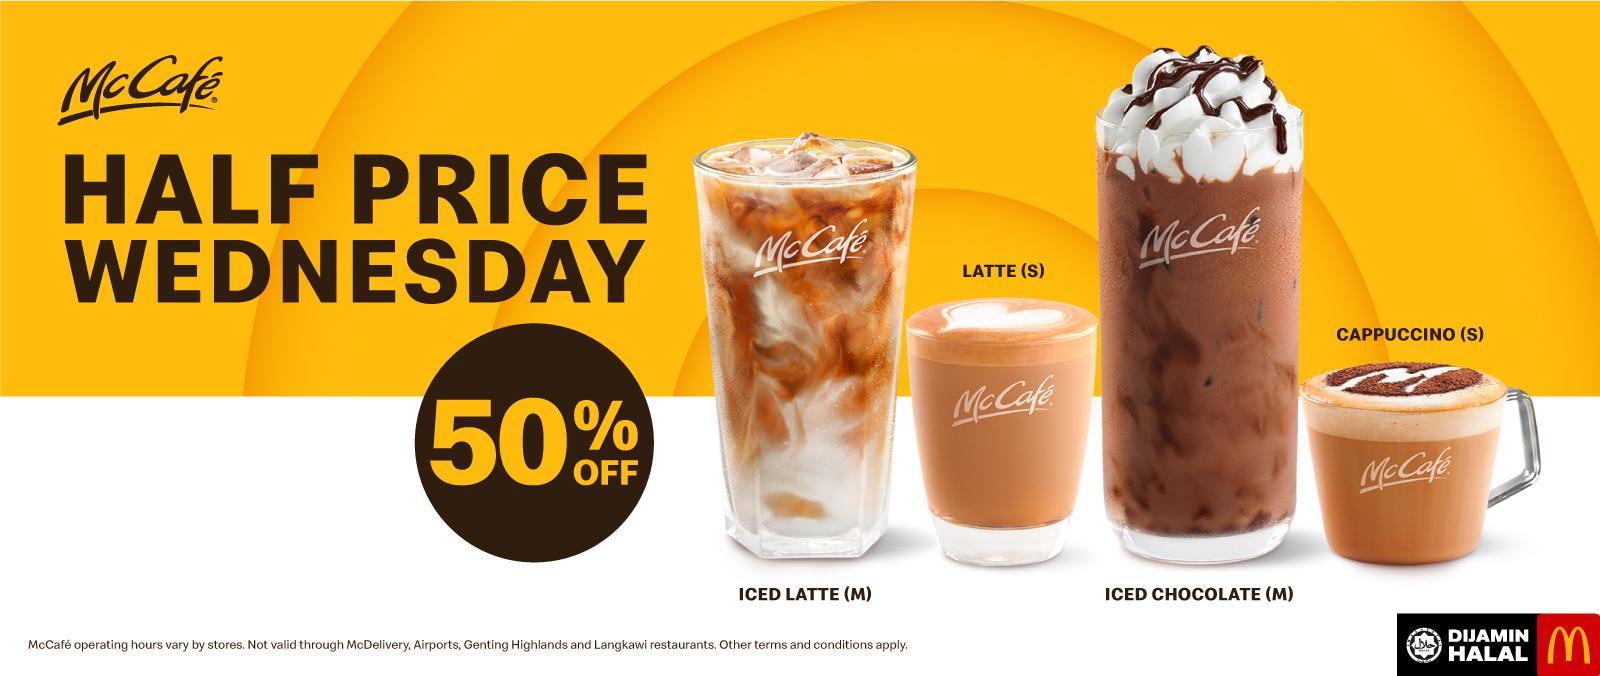 McCafe Half Price Wednesday 's image'